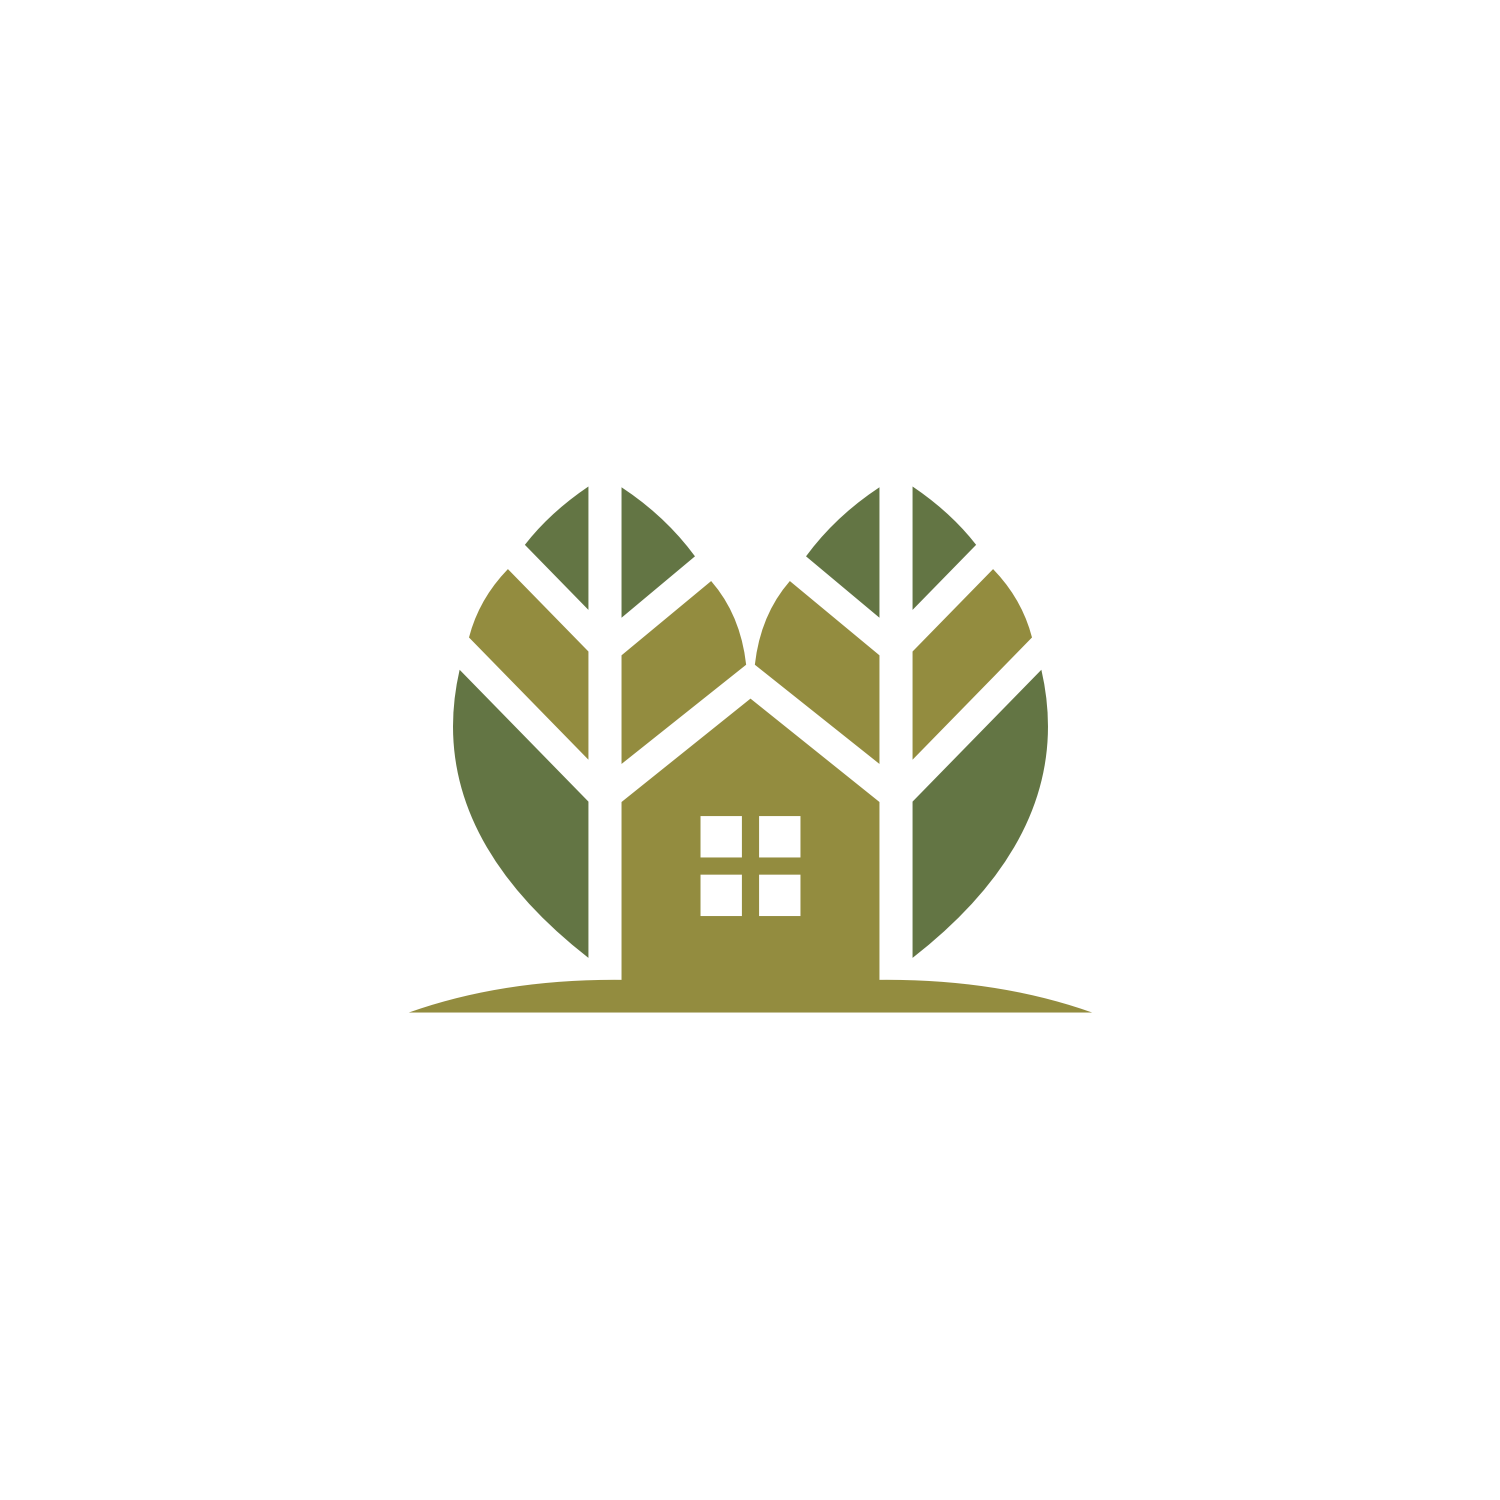 Eco Friendly Homes Logo cover image.